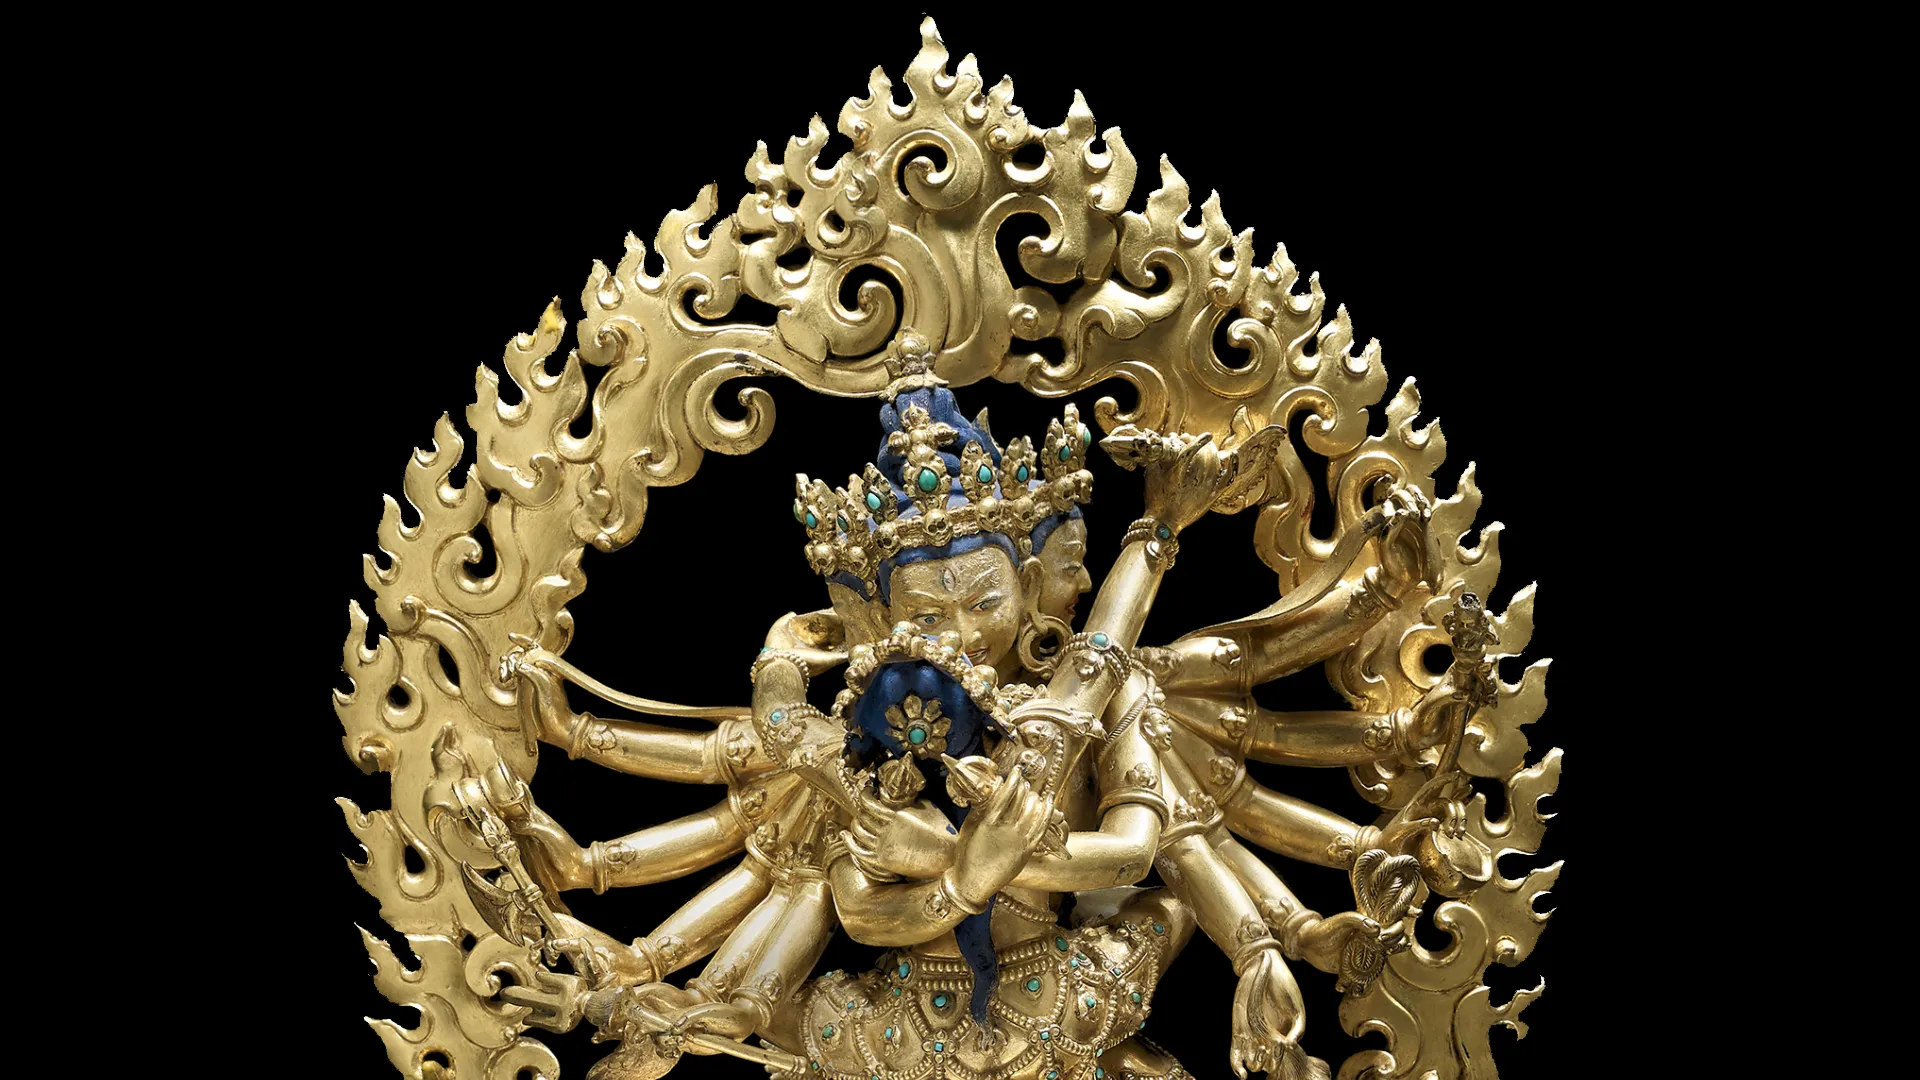 A gilt copper alloy figure of Chakrasamvara